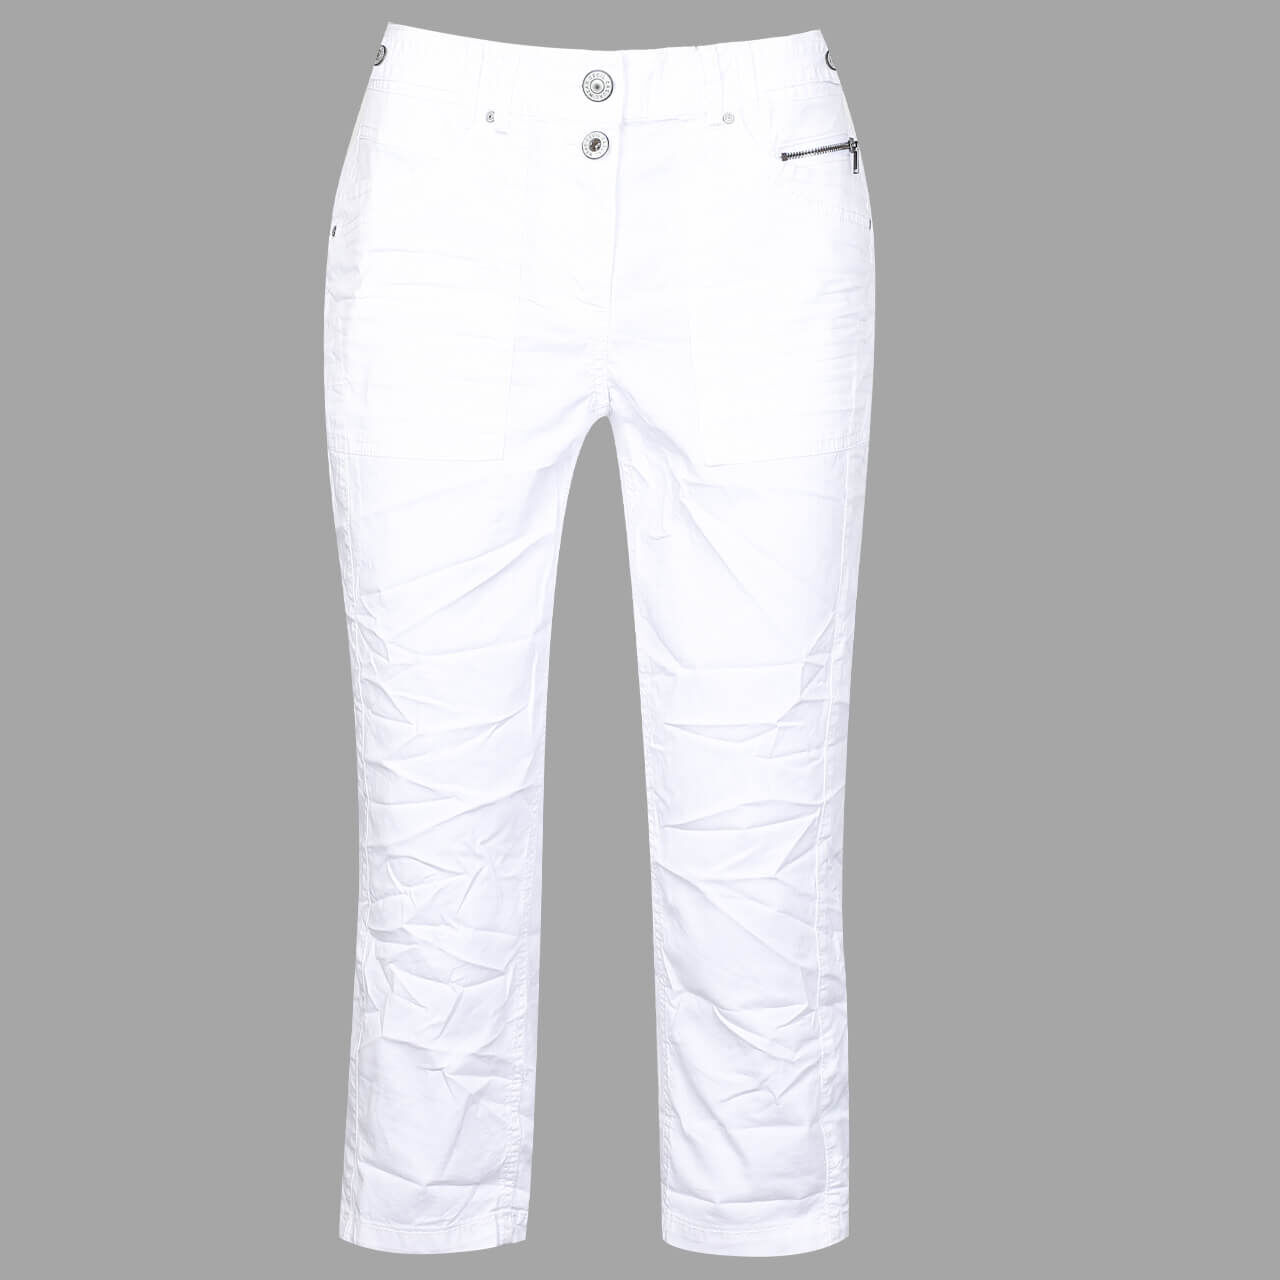 Cecil New York Capri Baumwollhose für Damen in Weiß, FarbNr.: 10000